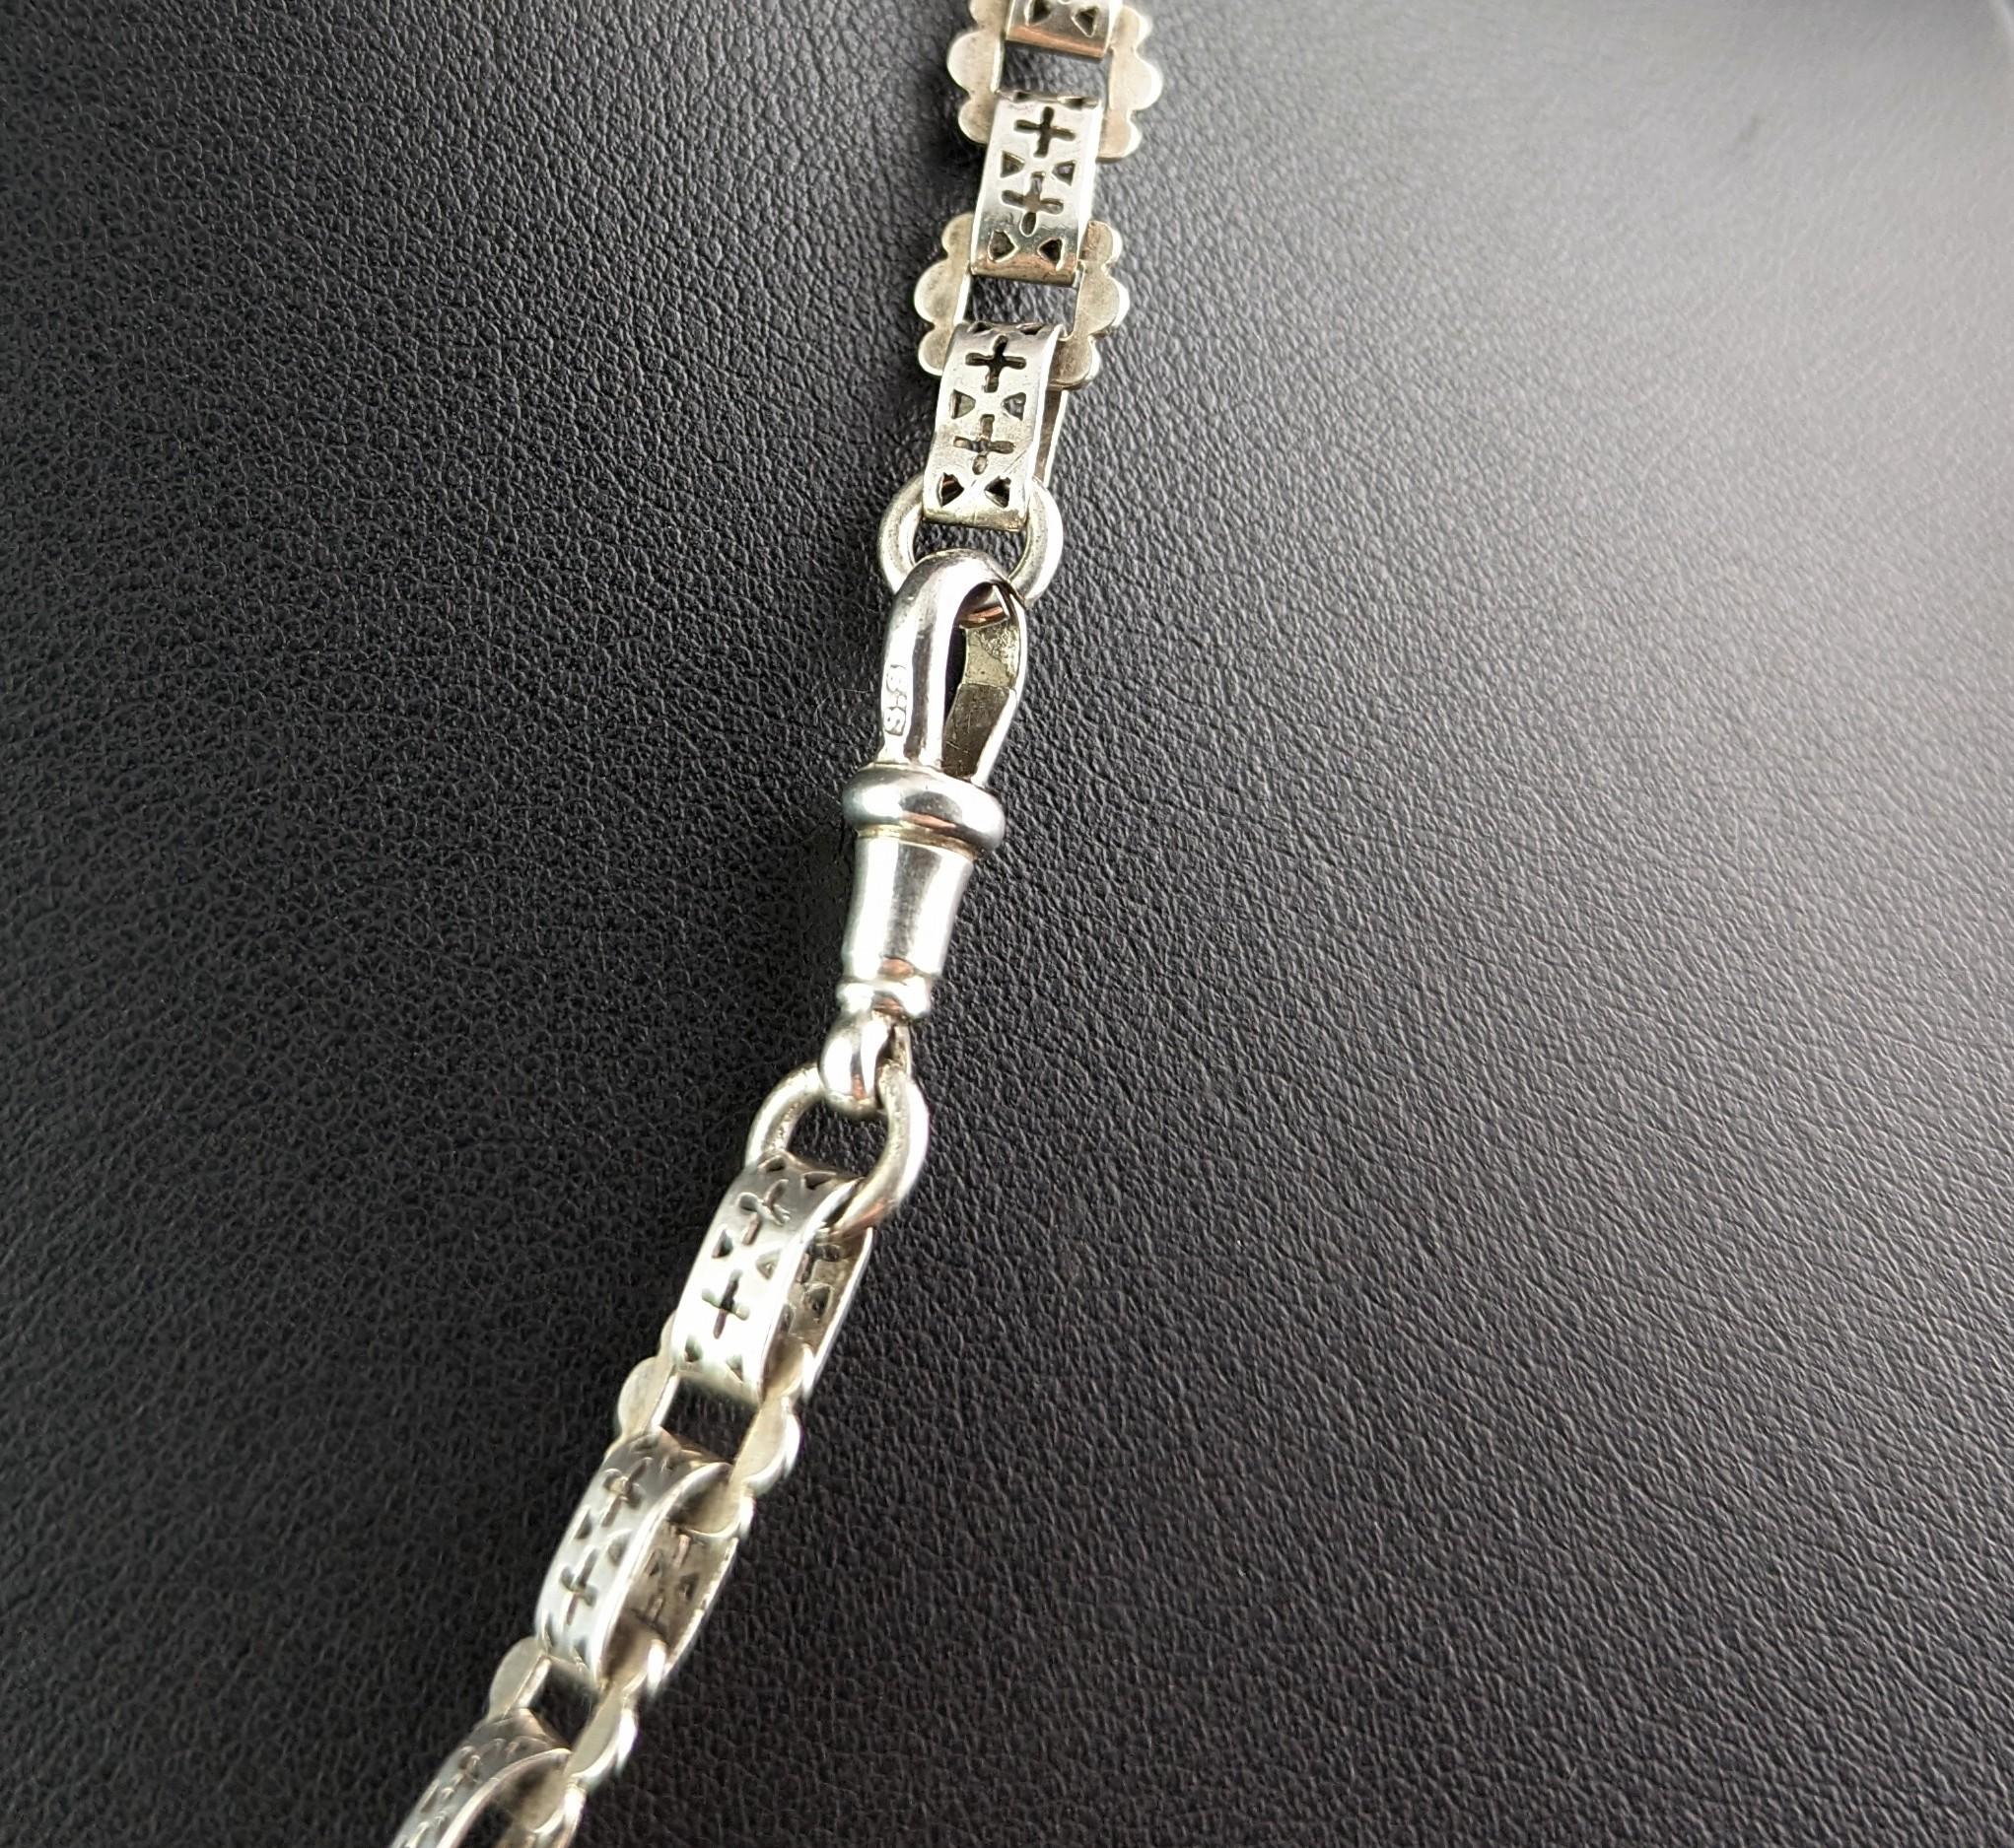 Antique Silver Book Chain Necklace, Victorian Collar 4